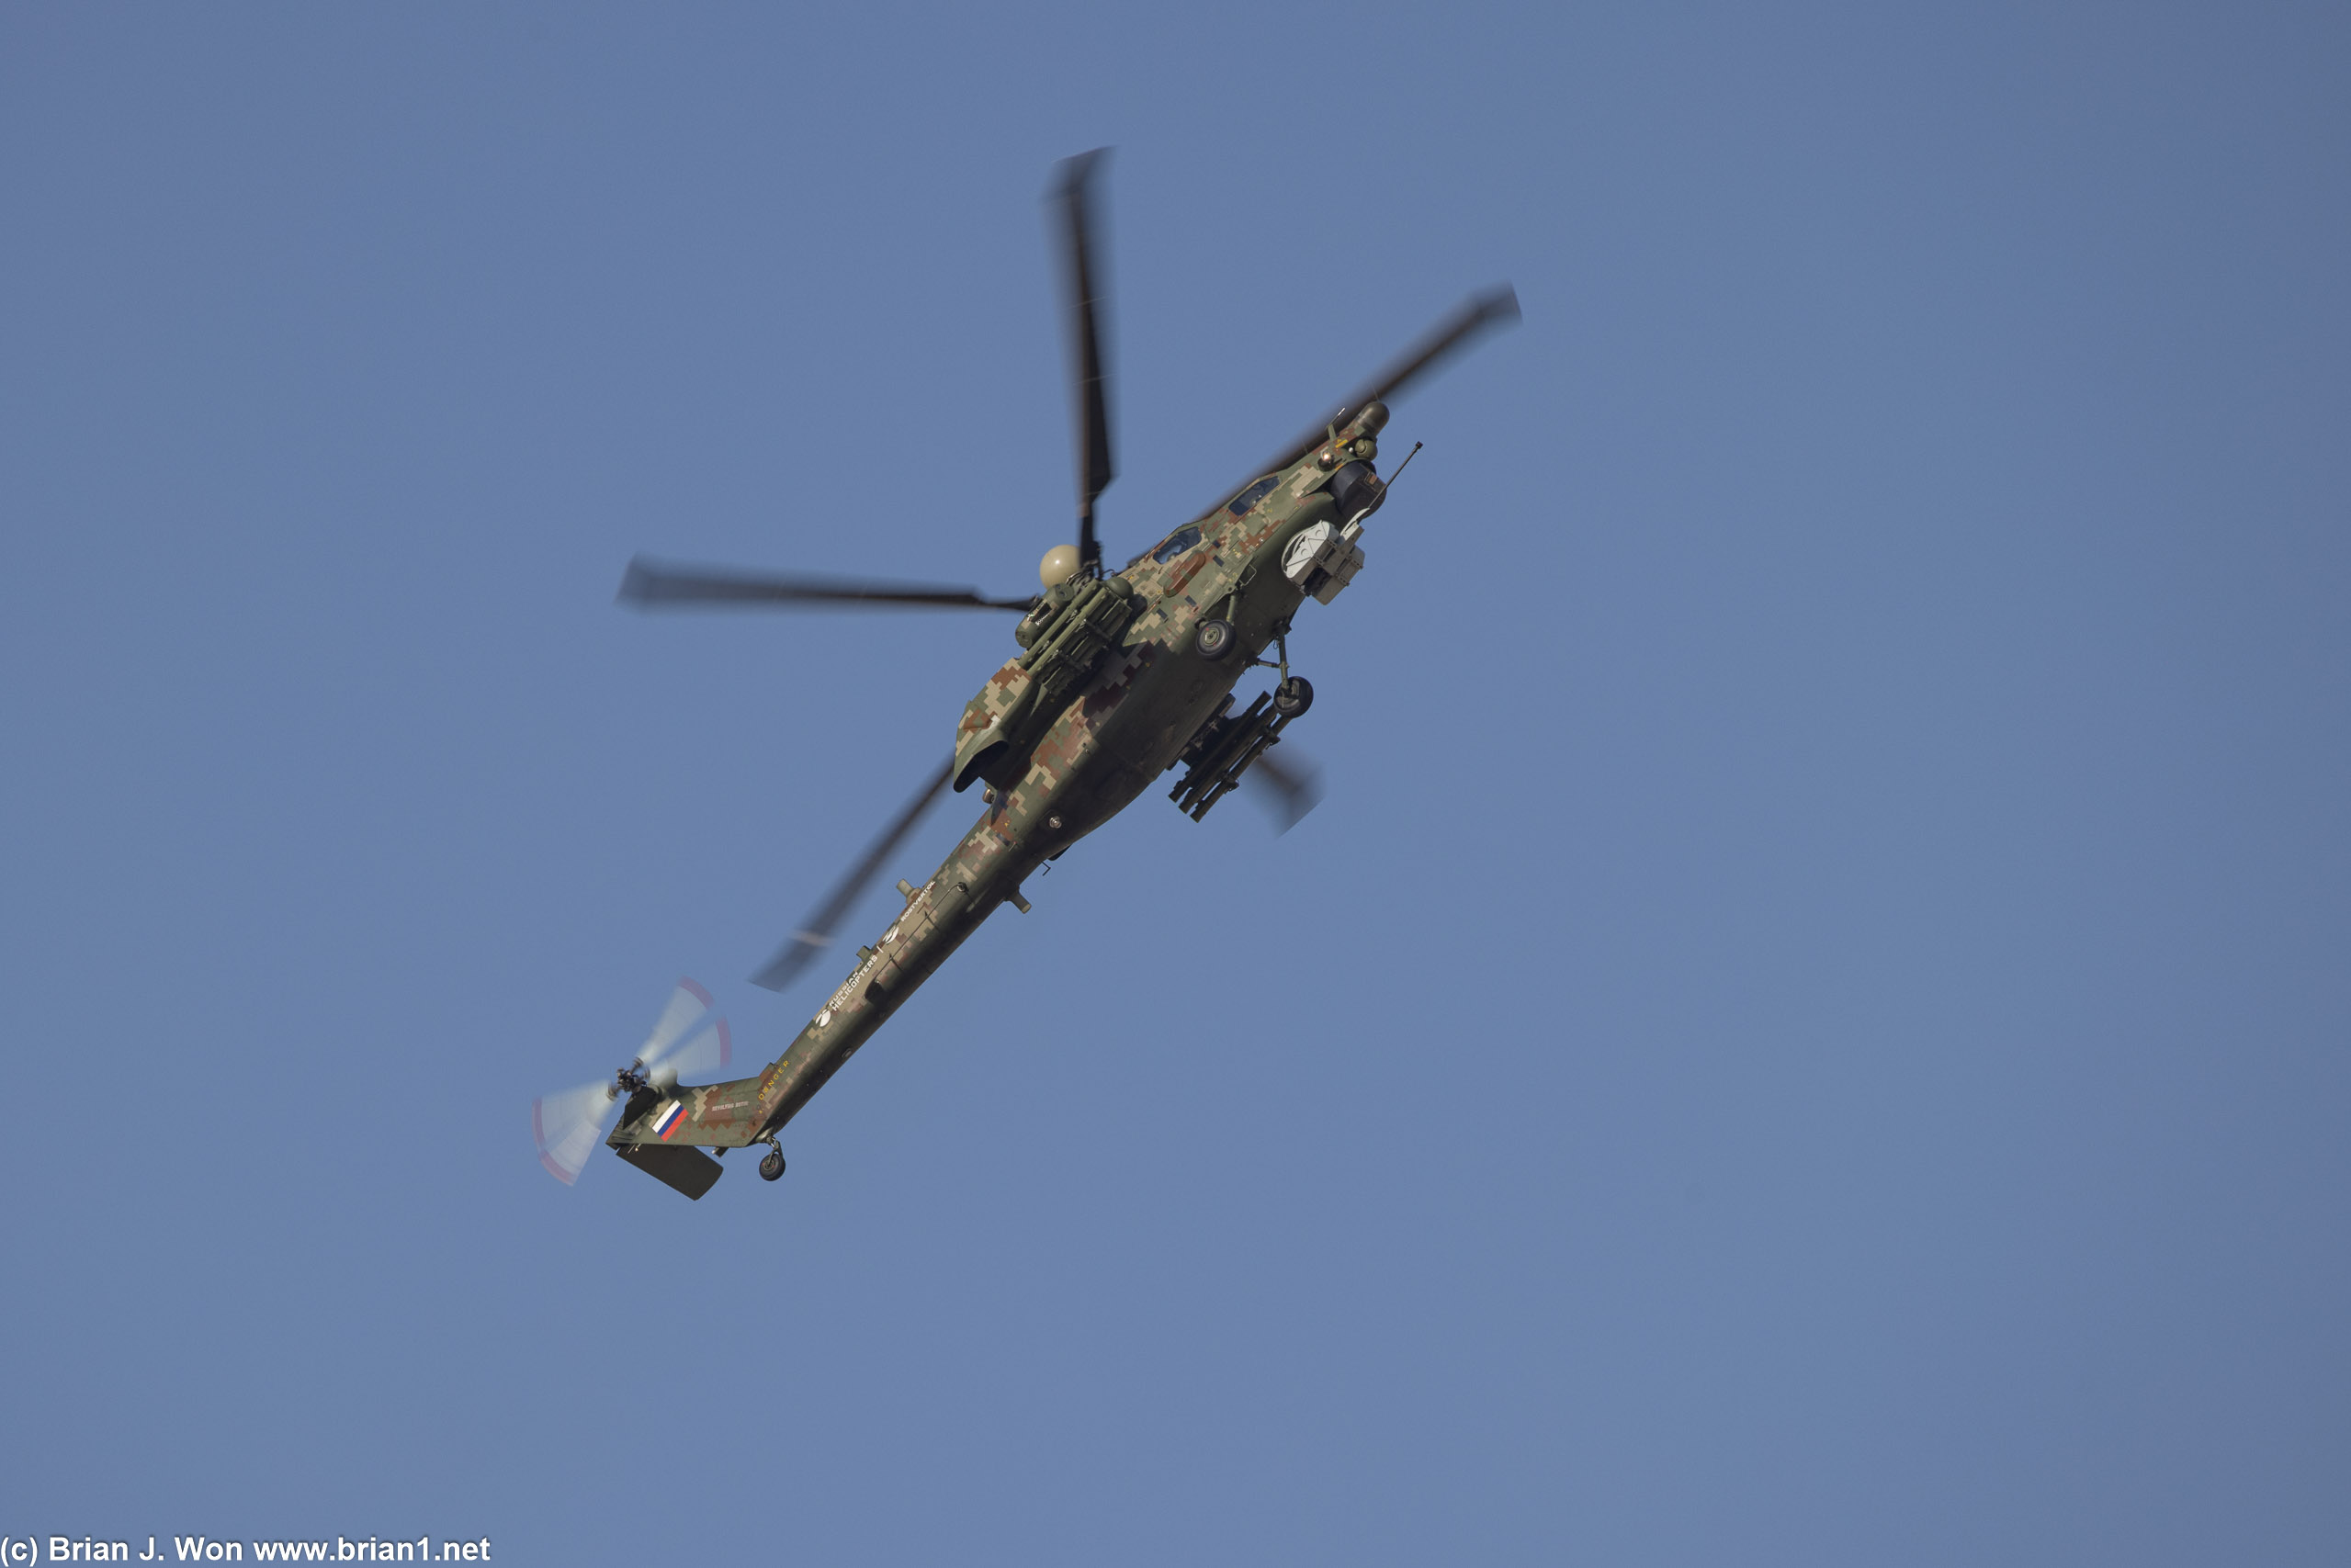 Mil Mi-28 Havoc. Incredible manuverability.